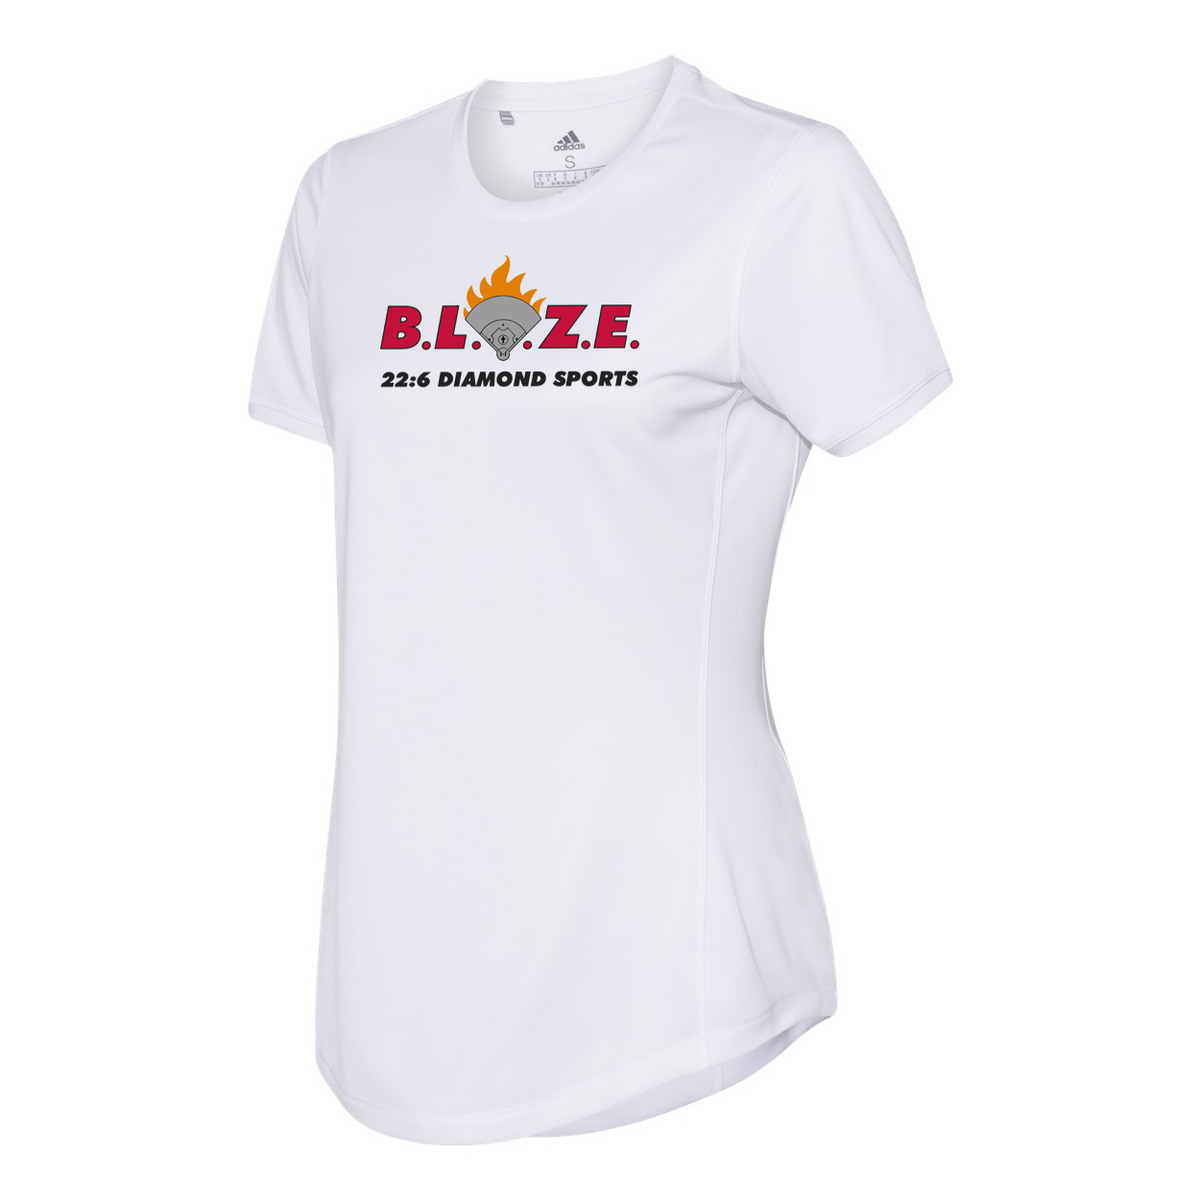 BLAZE 22:6 Diamond Sports Women's Adidas Sport T-Shirt